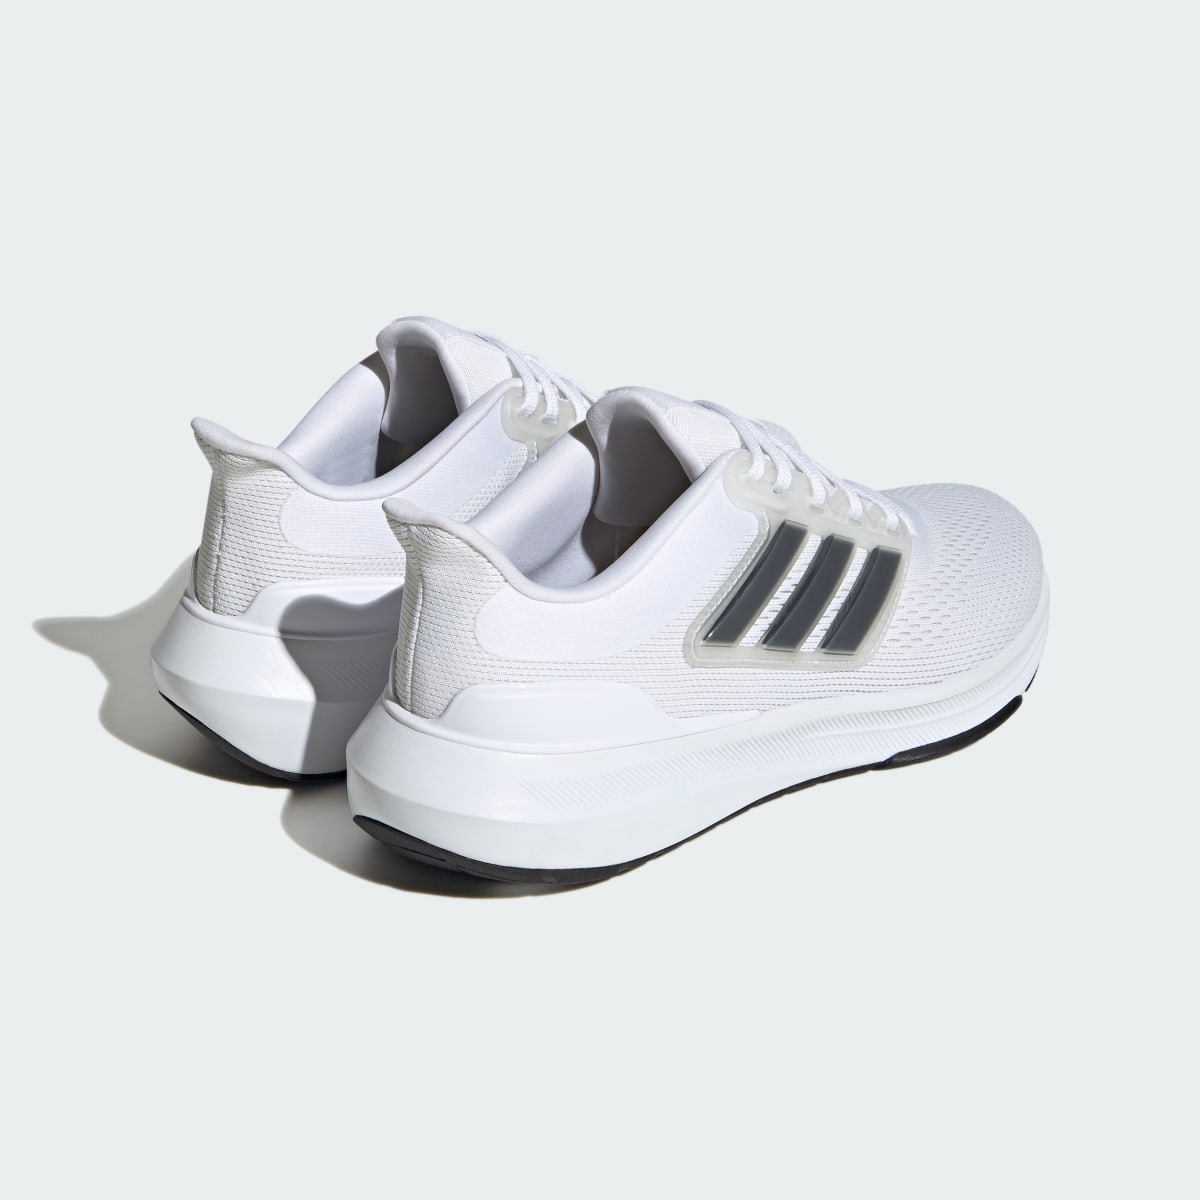 Adidas Ultrabounce Running Shoes. 6